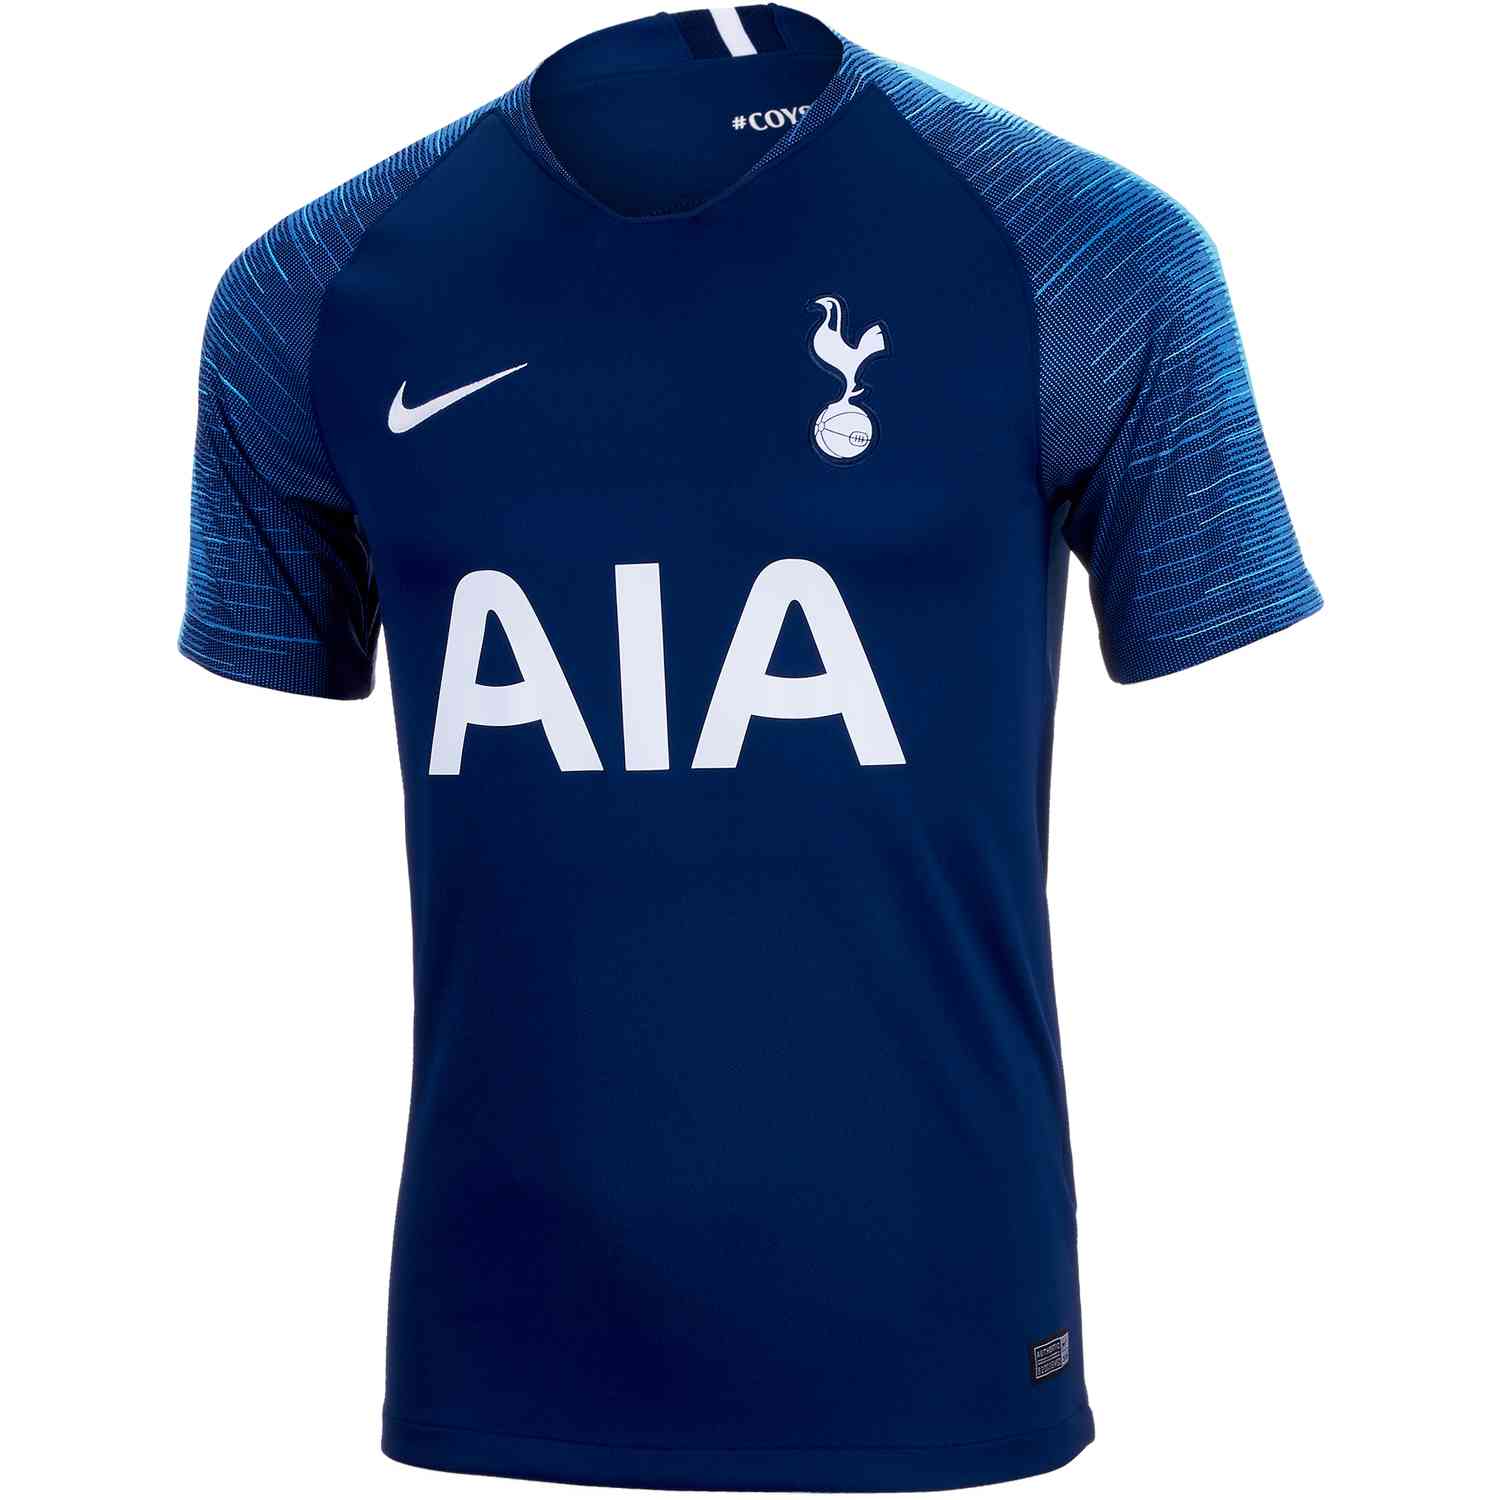 Tottenham Hotspur Spurs 2018 - 2019 home shirt jersey camiseta Nike size M